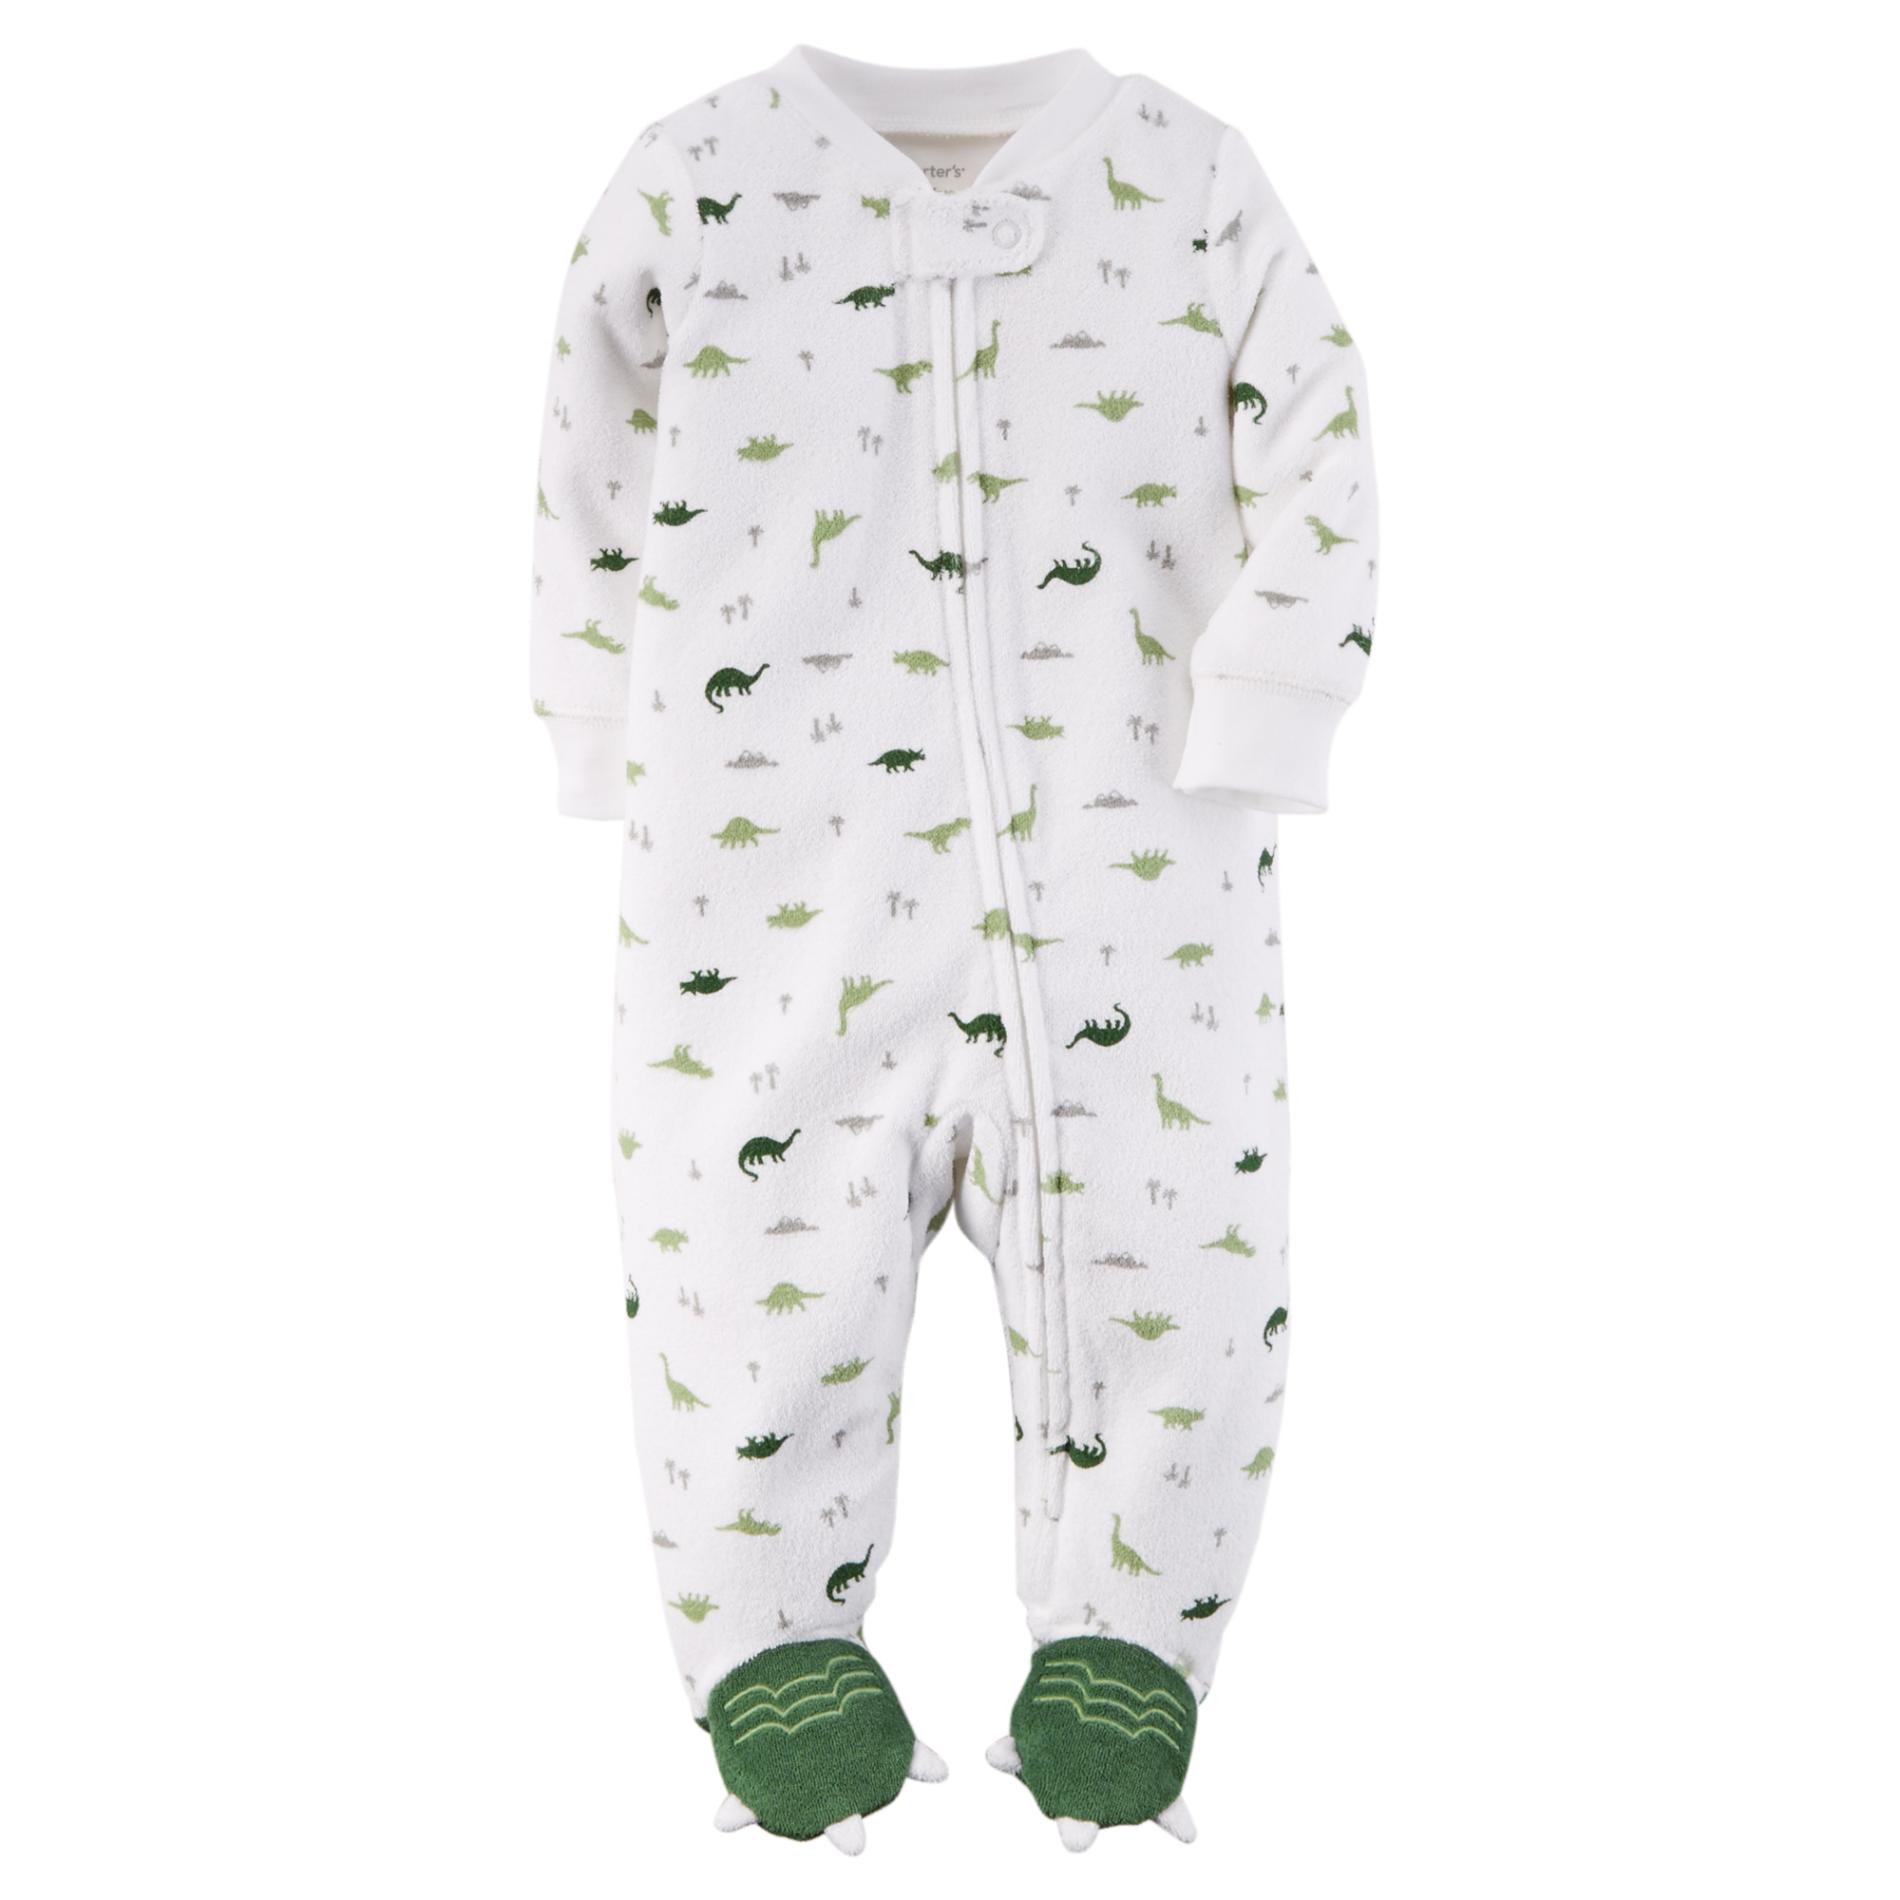 Carter's Newborn Boy's Terry Cloth Sleeper Pajamas Dinosaur Clothing Baby Clothing Baby